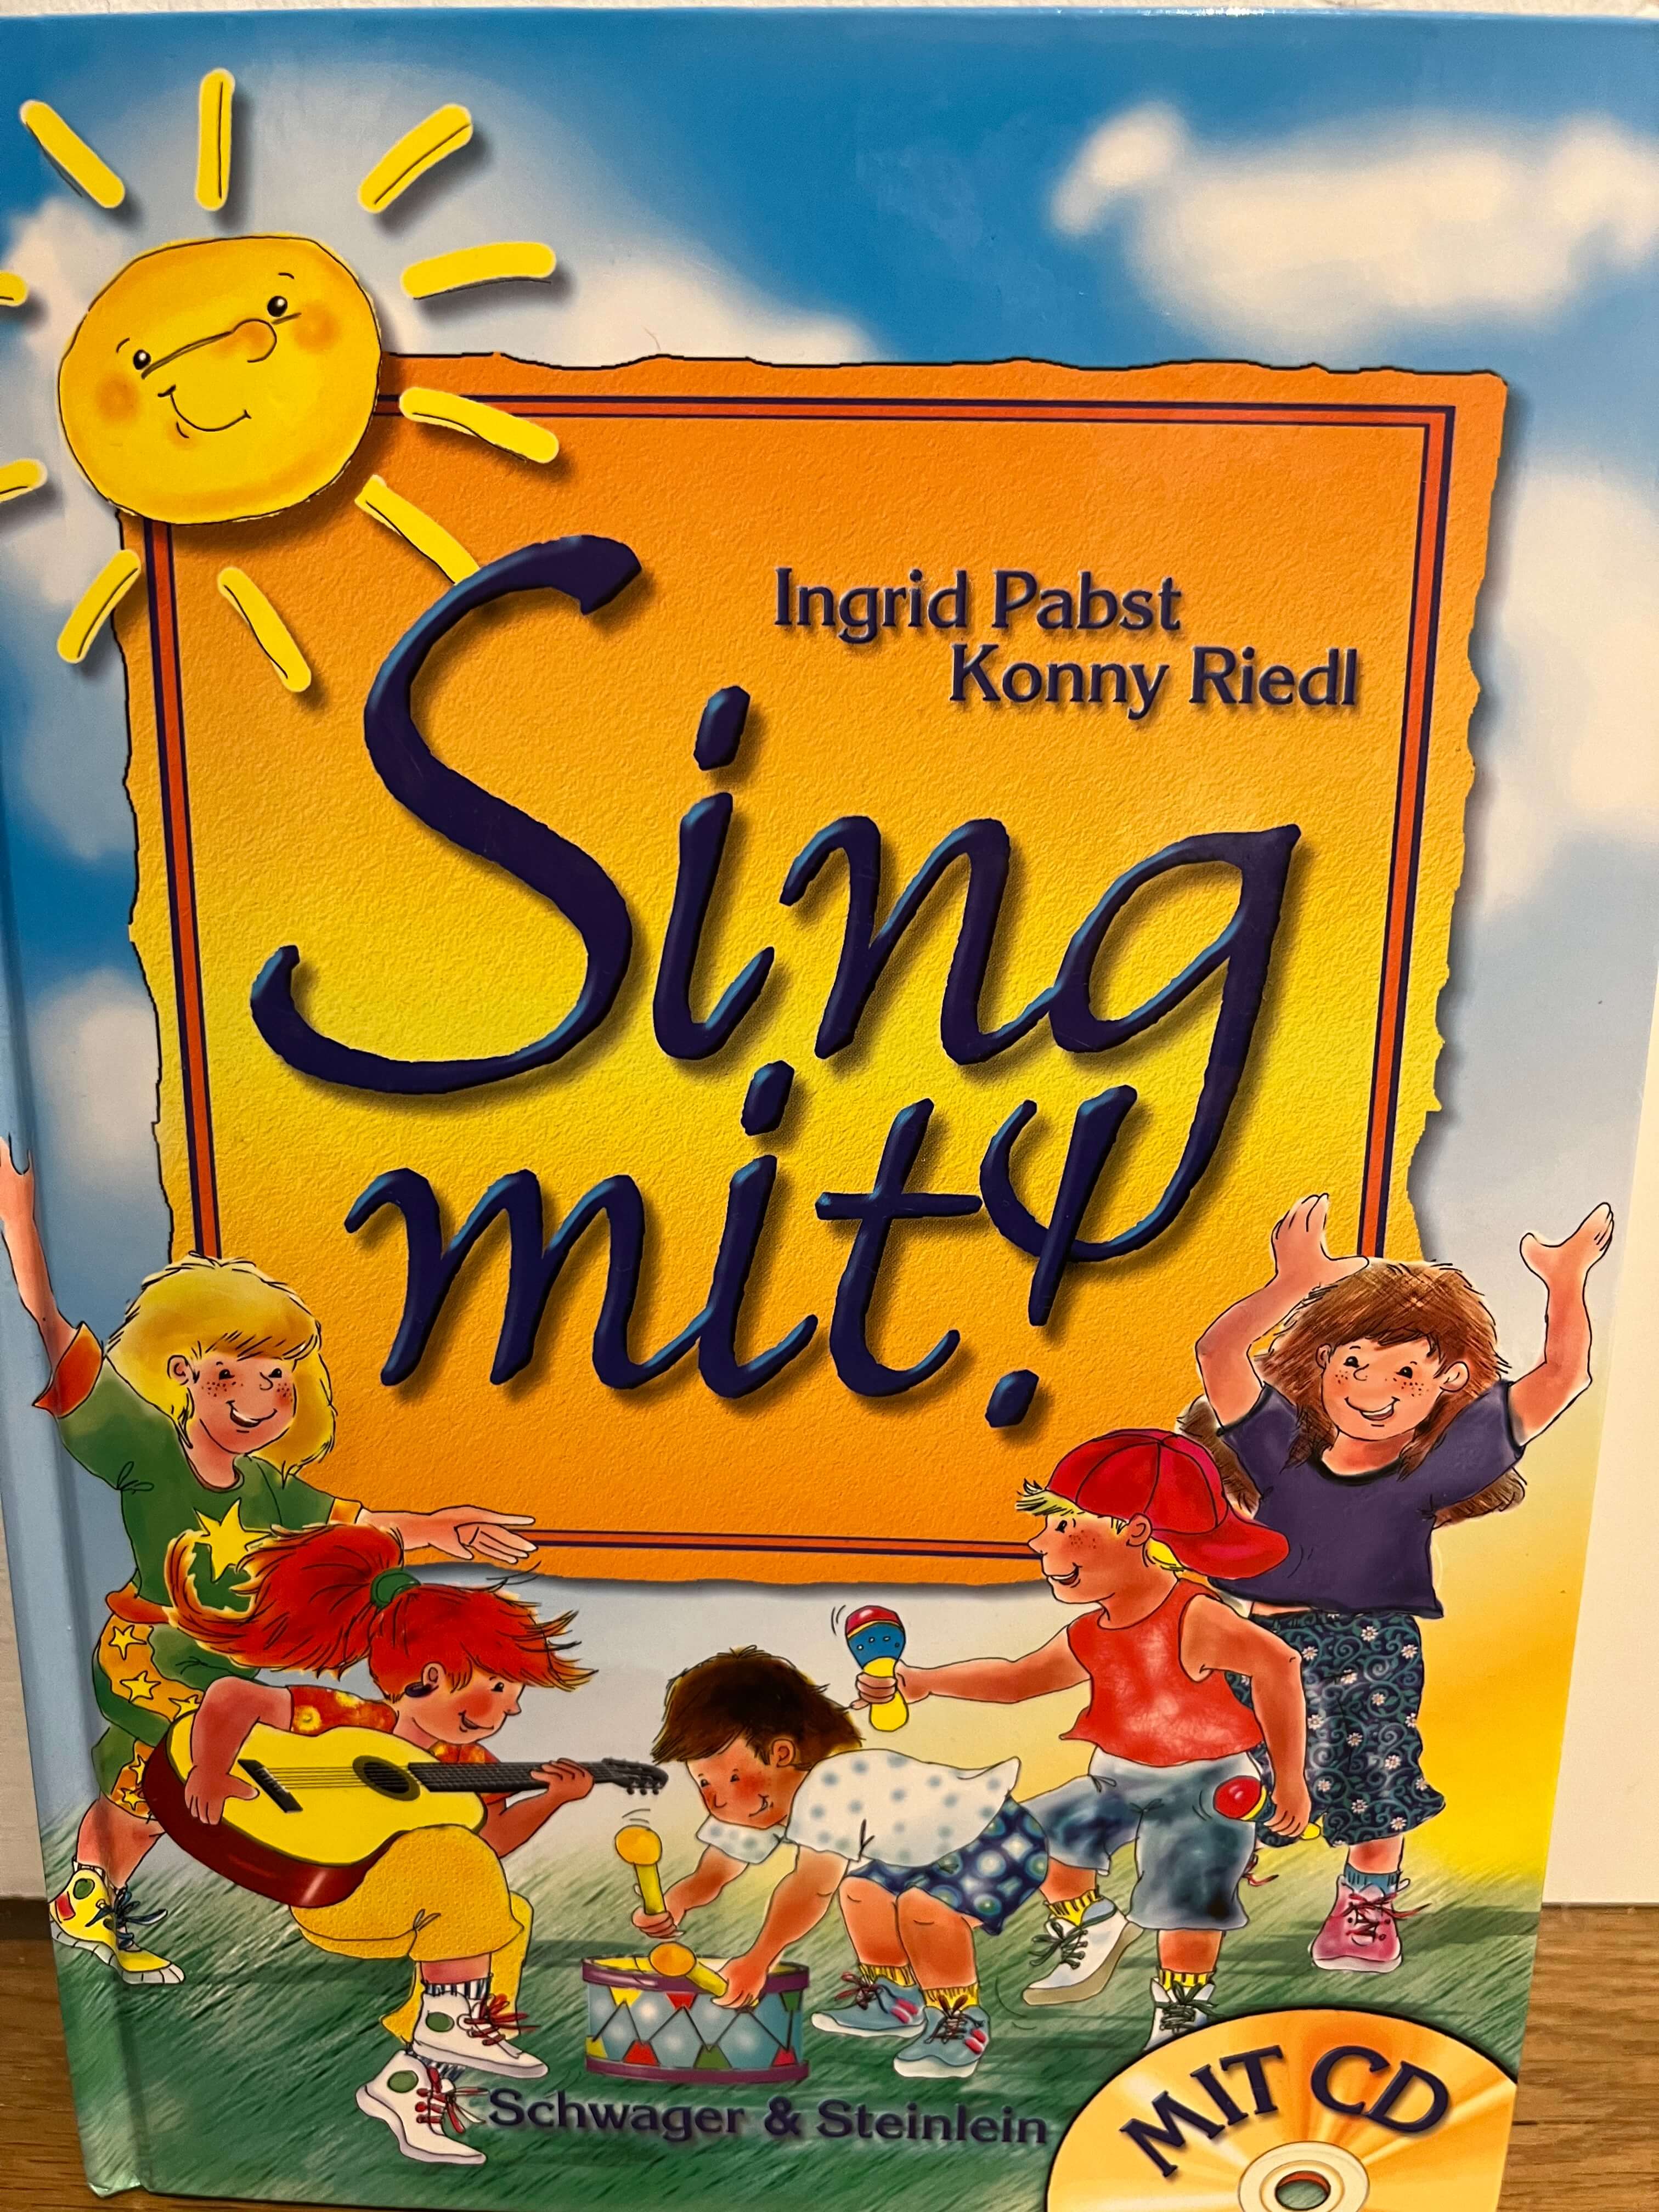 Sing mit!